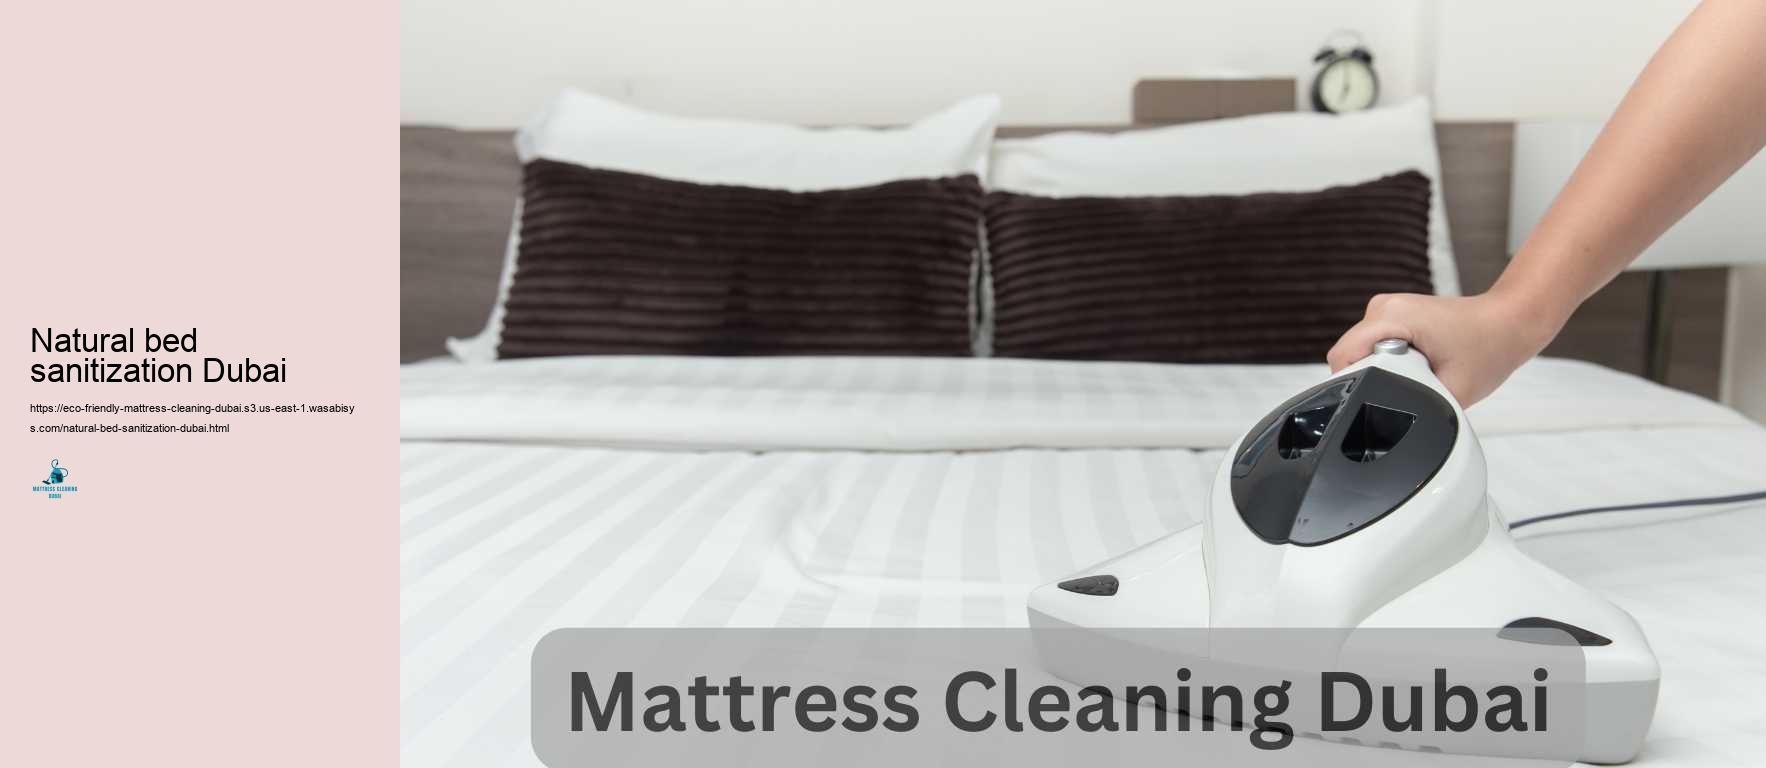 Natural bed sanitization Dubai